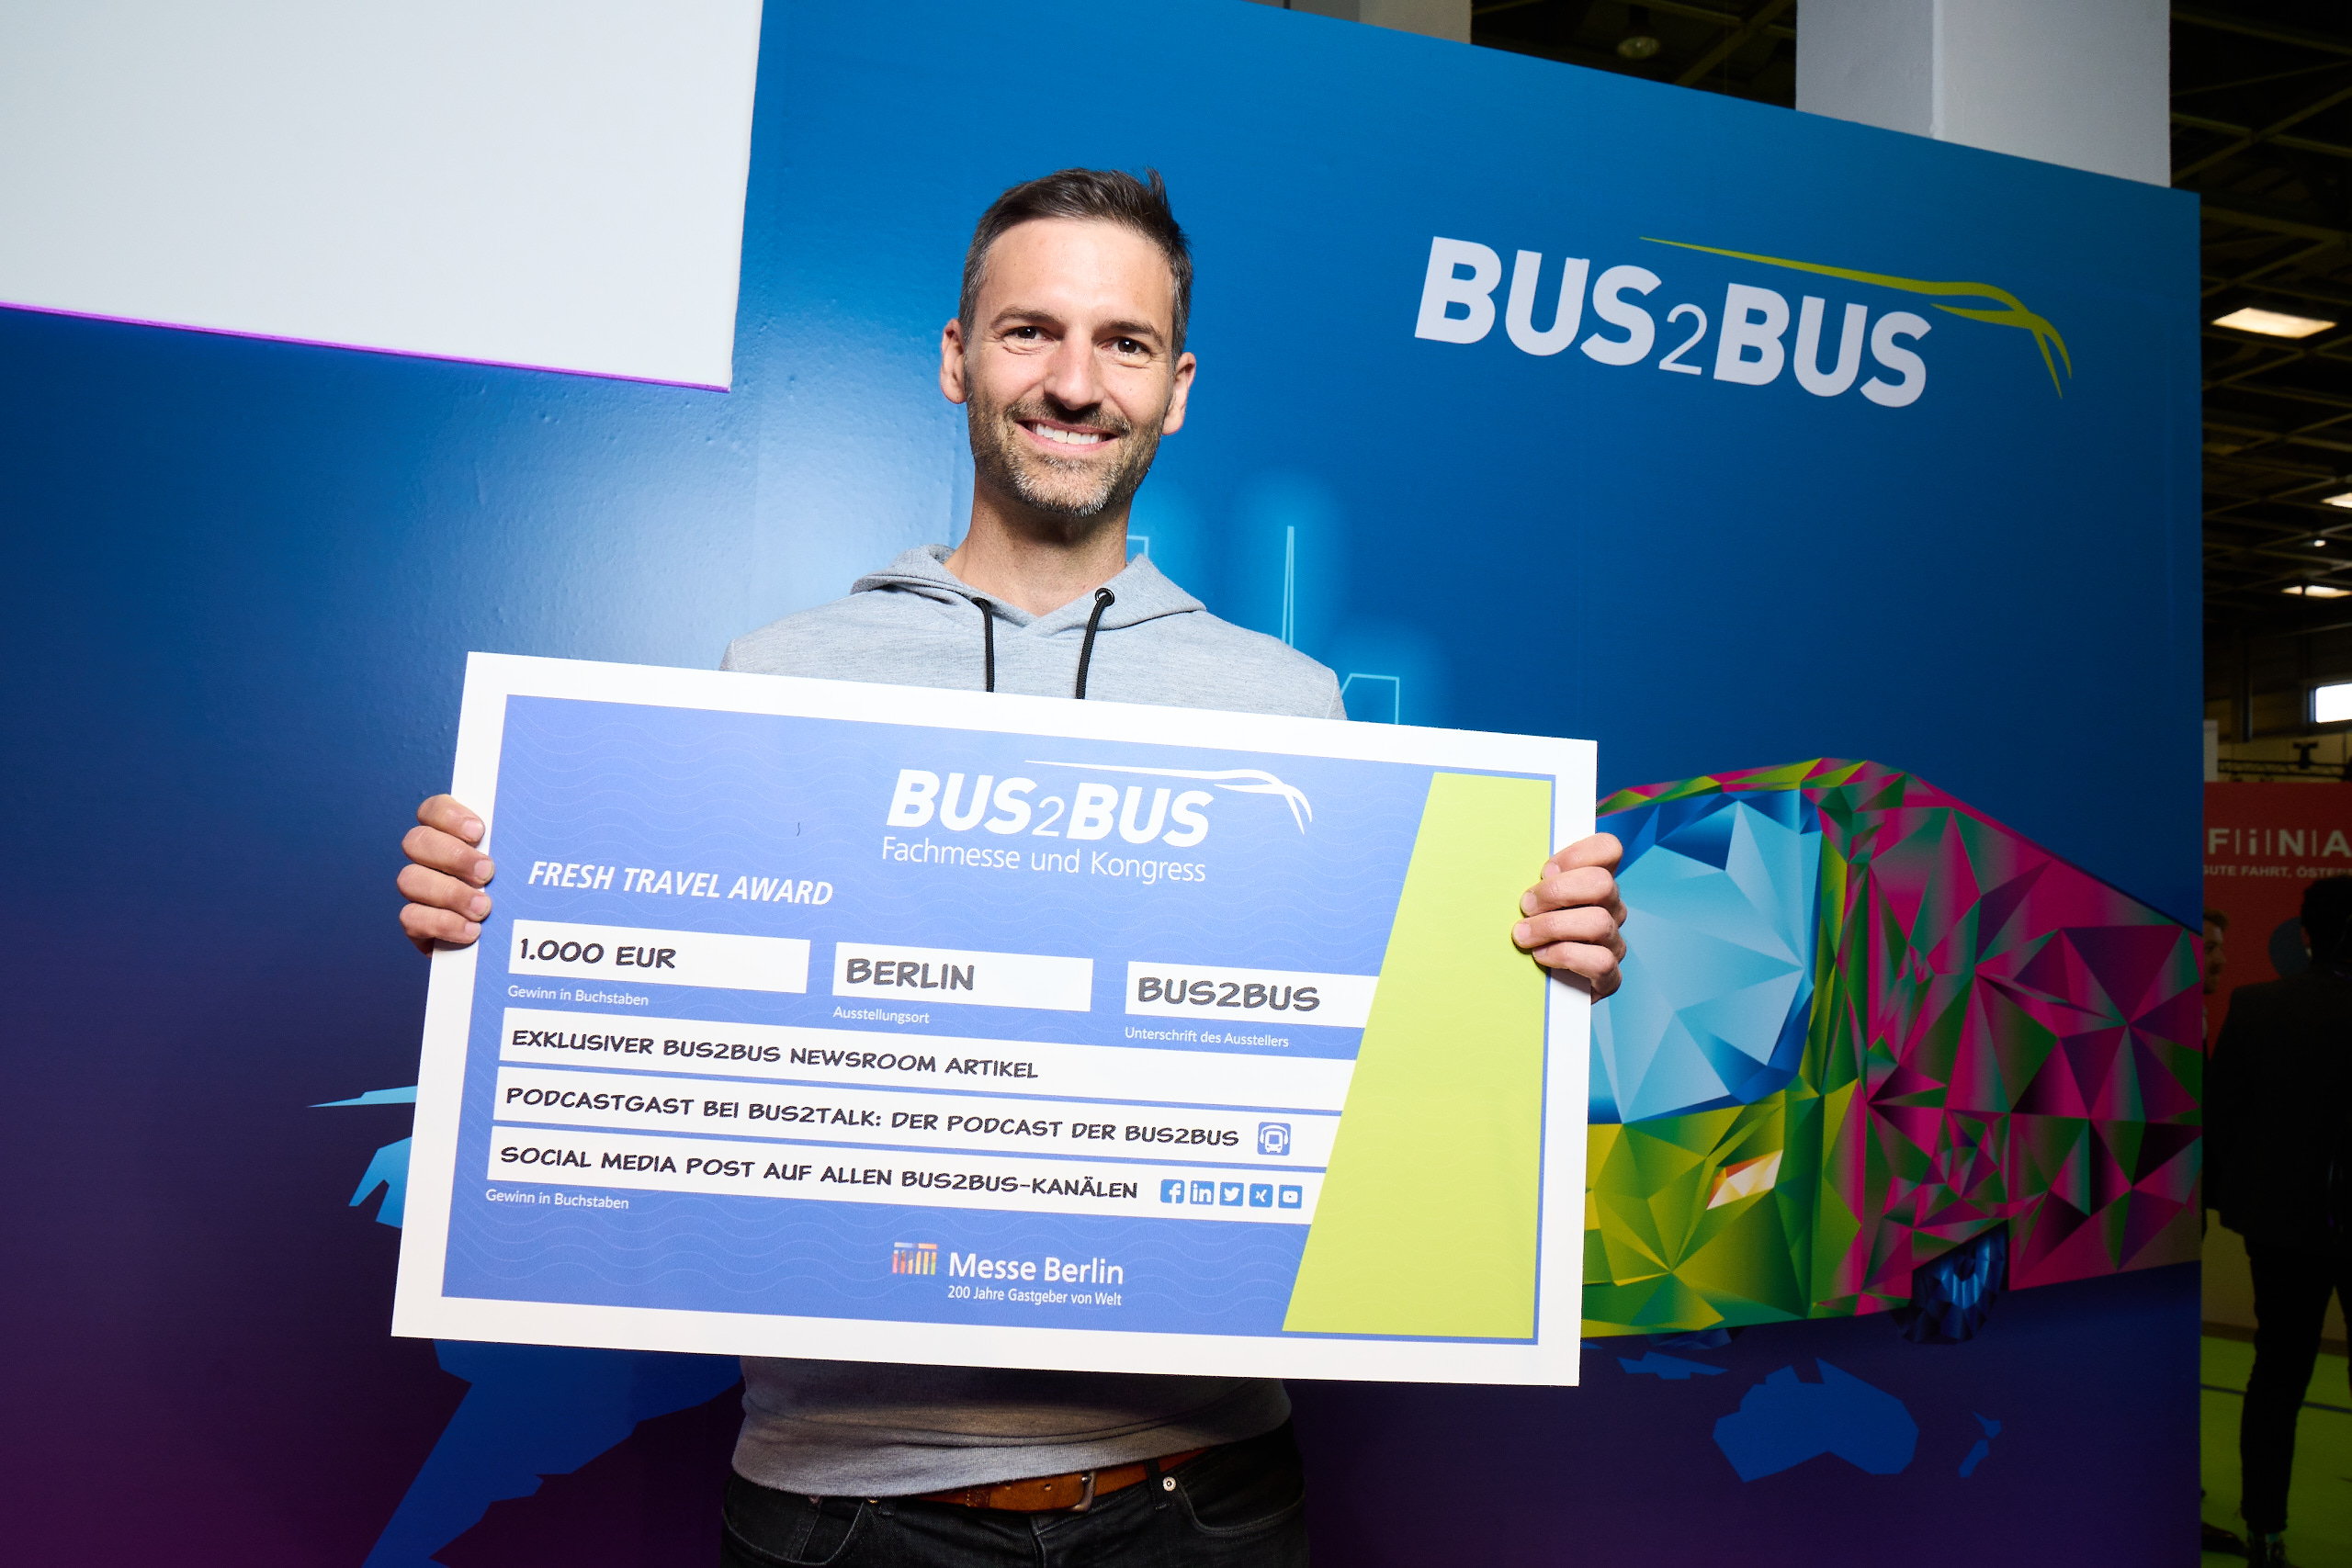 The image shows the presentation of the Fresh Travel Award 2022 and the winner Luca Bortolani. 